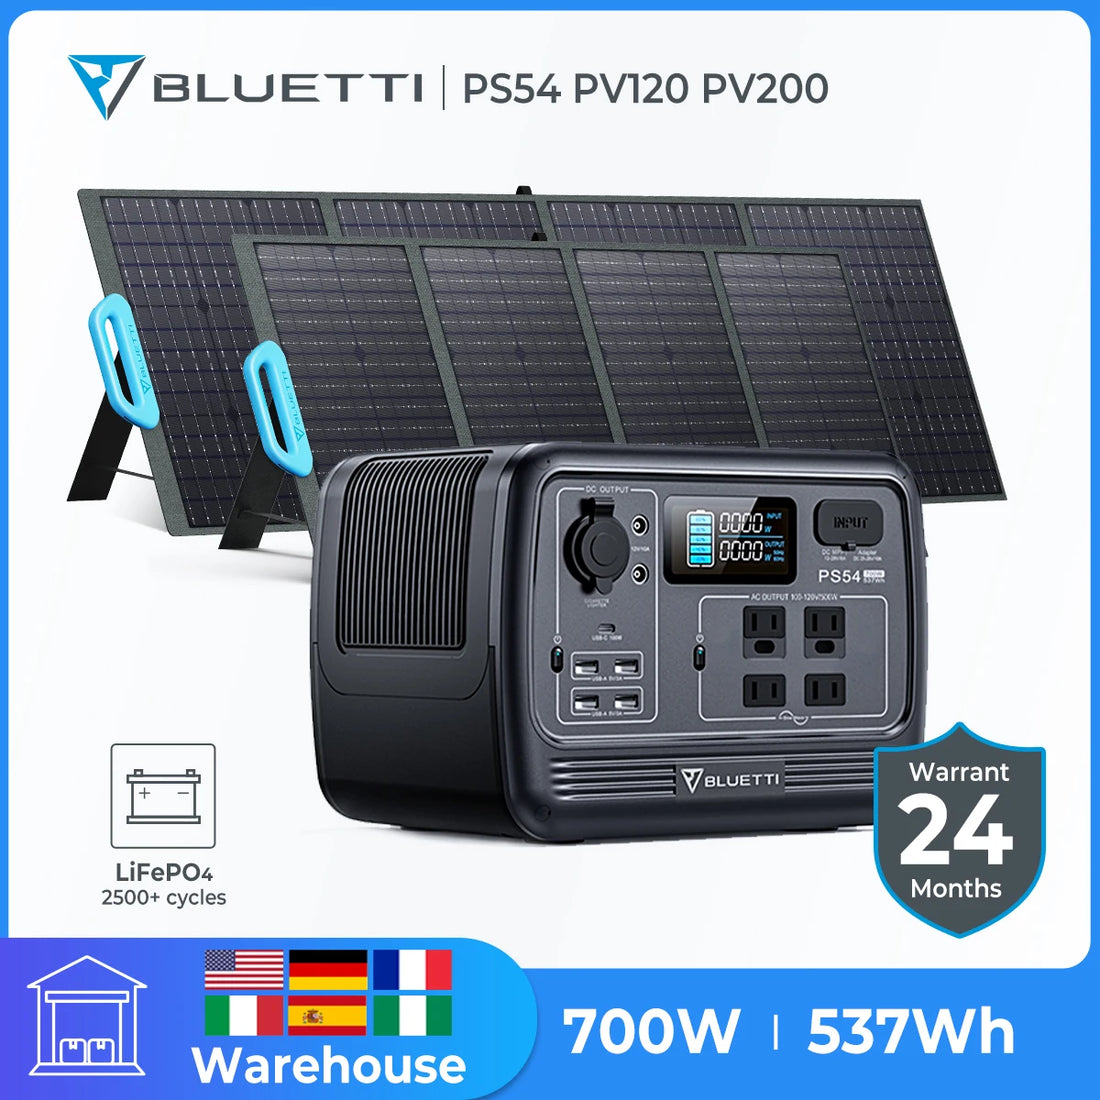 BLUETTI PS54 700W 537Wh Portable Power Station - Fozz&